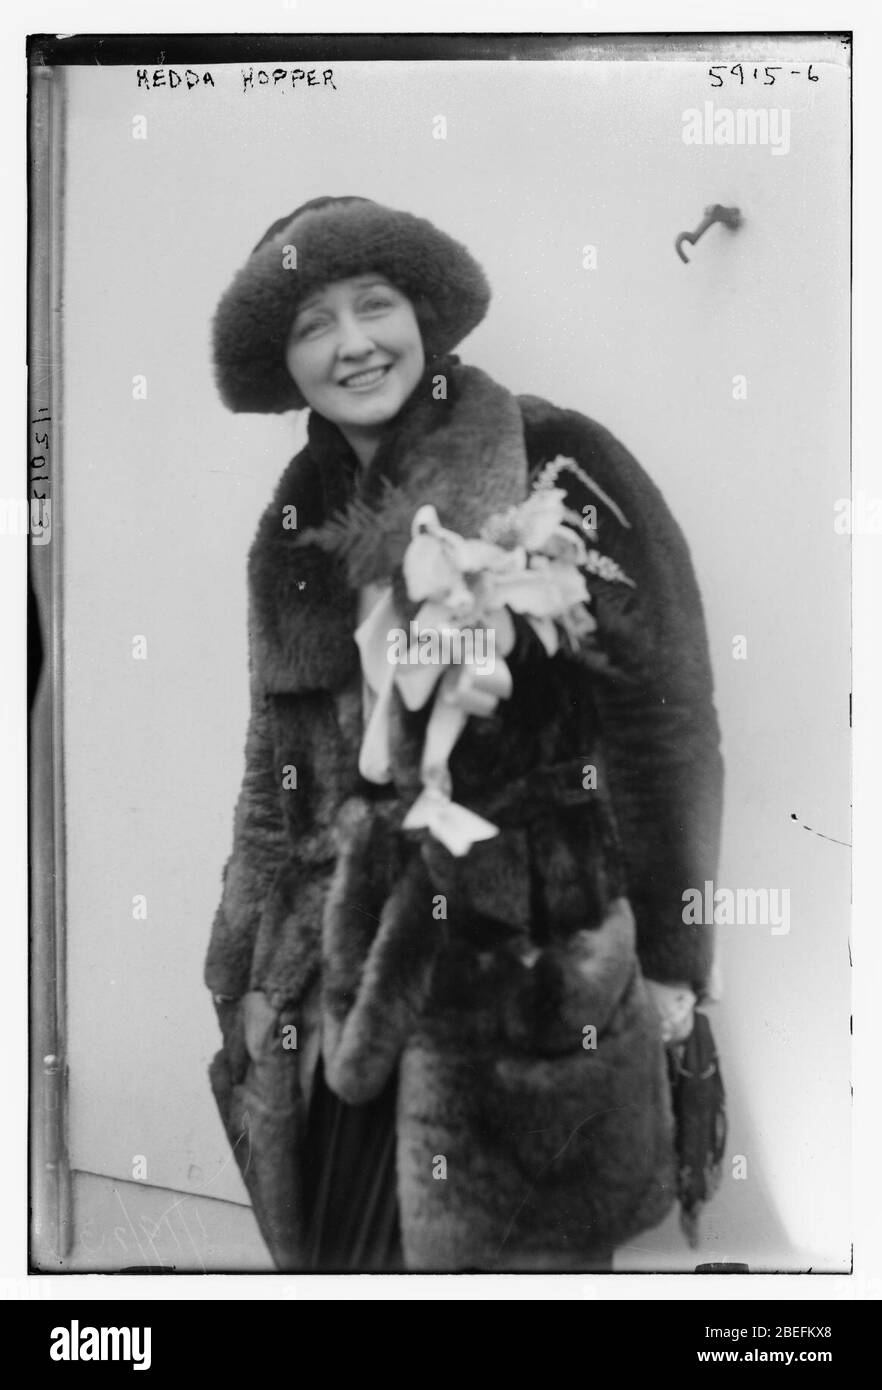 Hedda Hopper Stock Photo